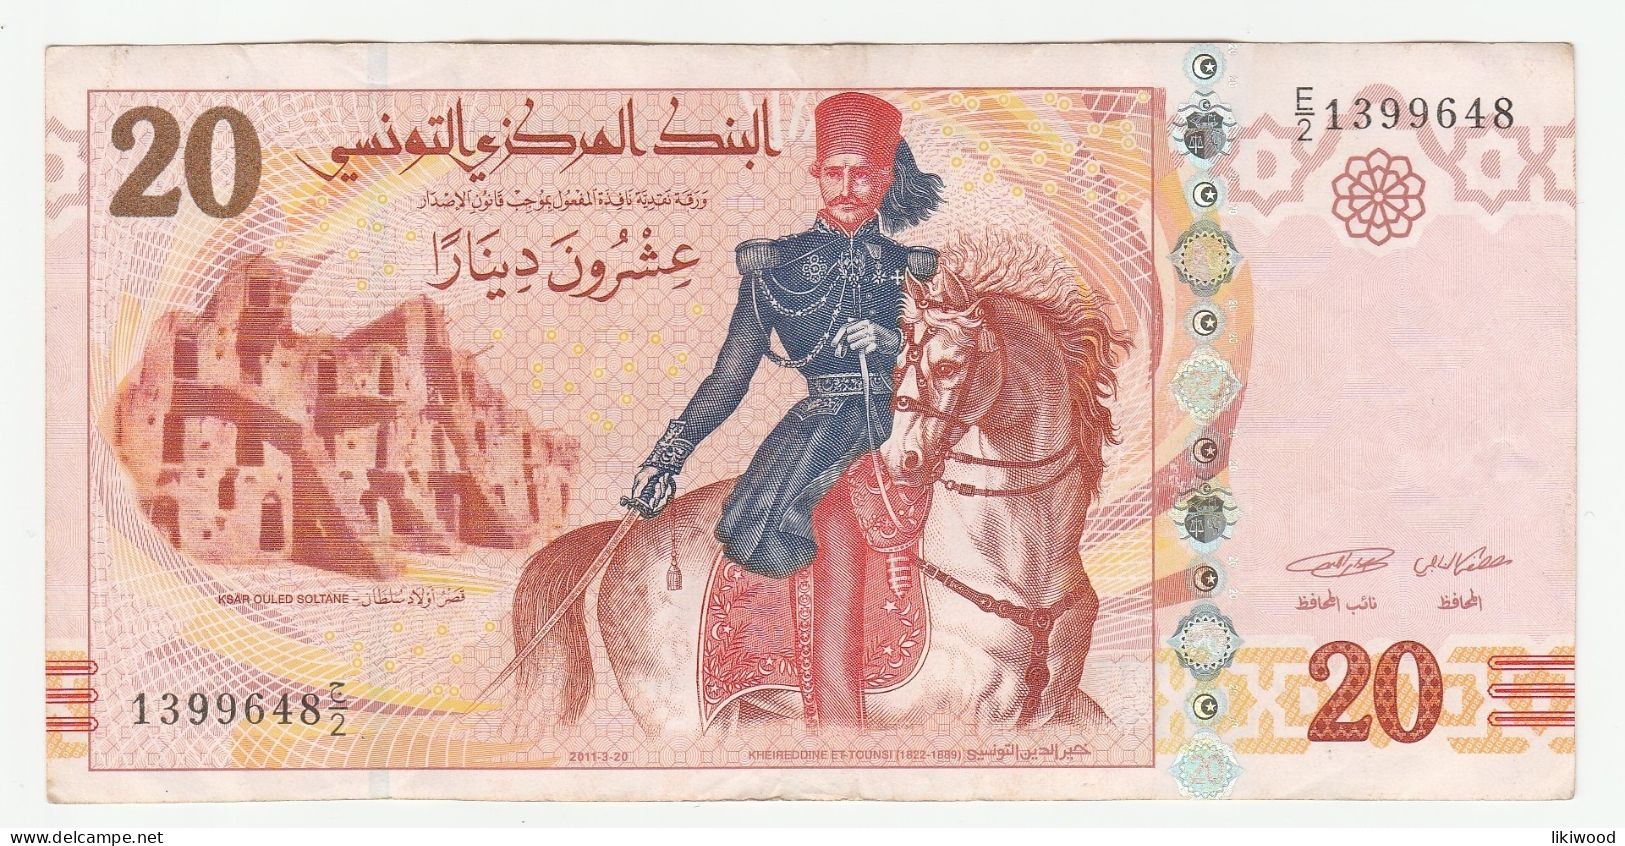 20 Dinars - 2011 - Tunisia - Khaireddine Et-Tounsi (1822-1889) Ksar Ouled Soltane - L'École Sadiki (error) - Tunesien